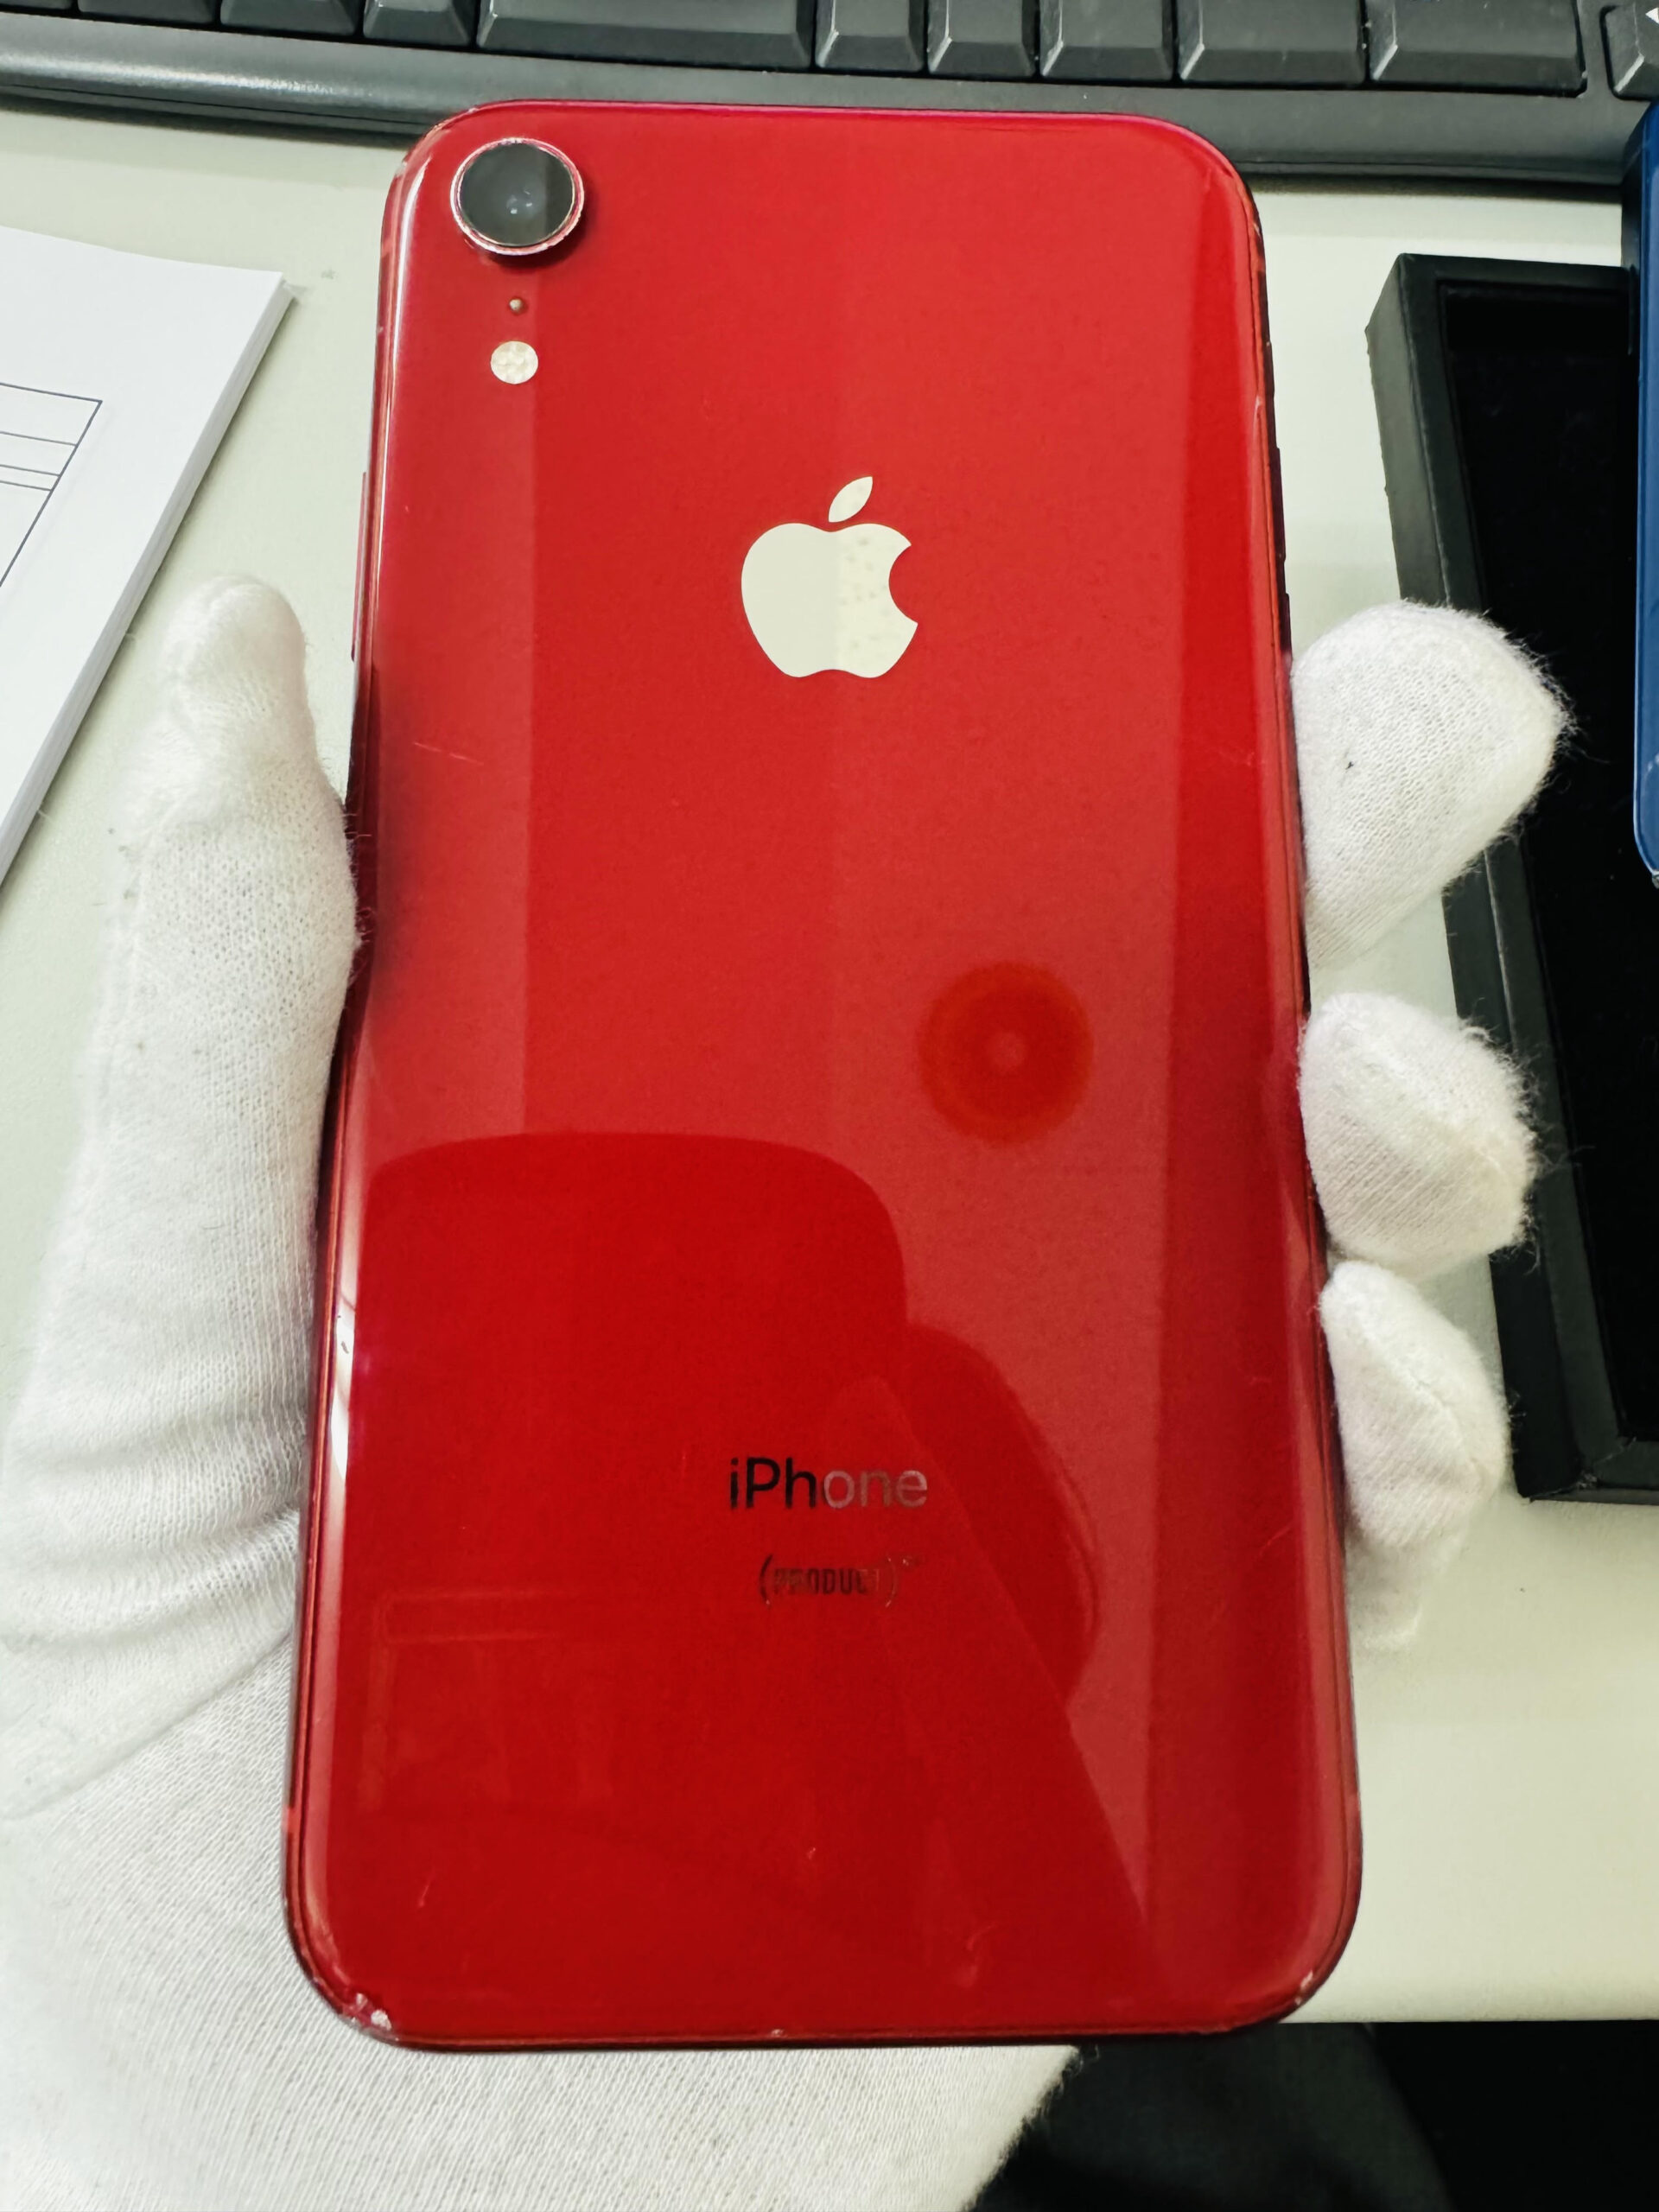 iPhoneXR 64GB au red 故障品(画面割れ液晶漏れ) 【所沢店】